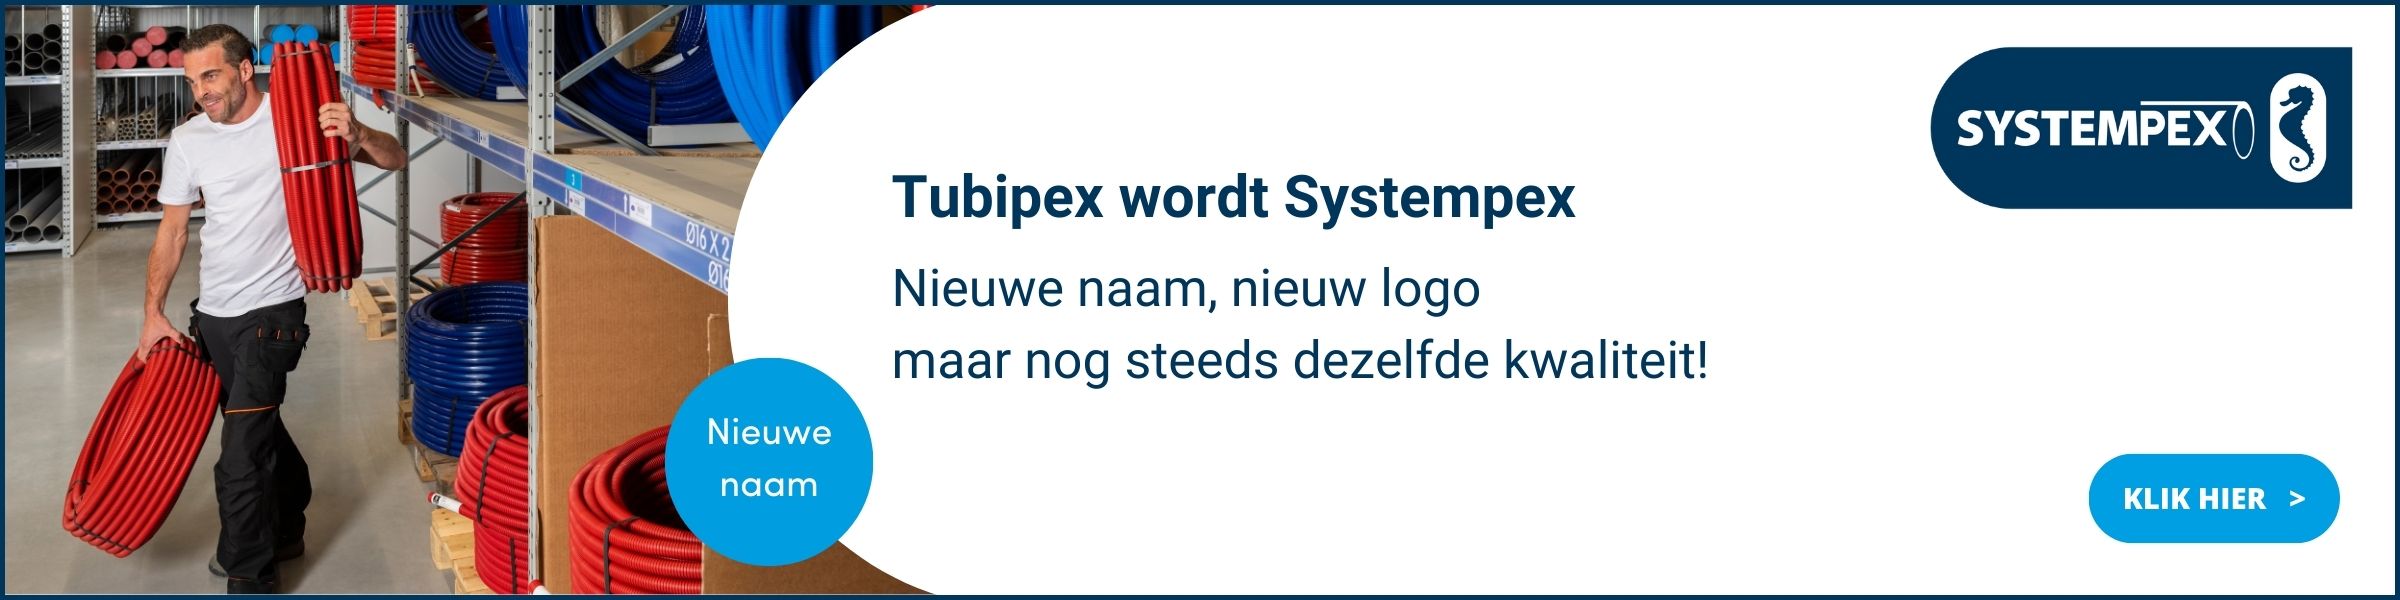 Tubipex systempex.jpg